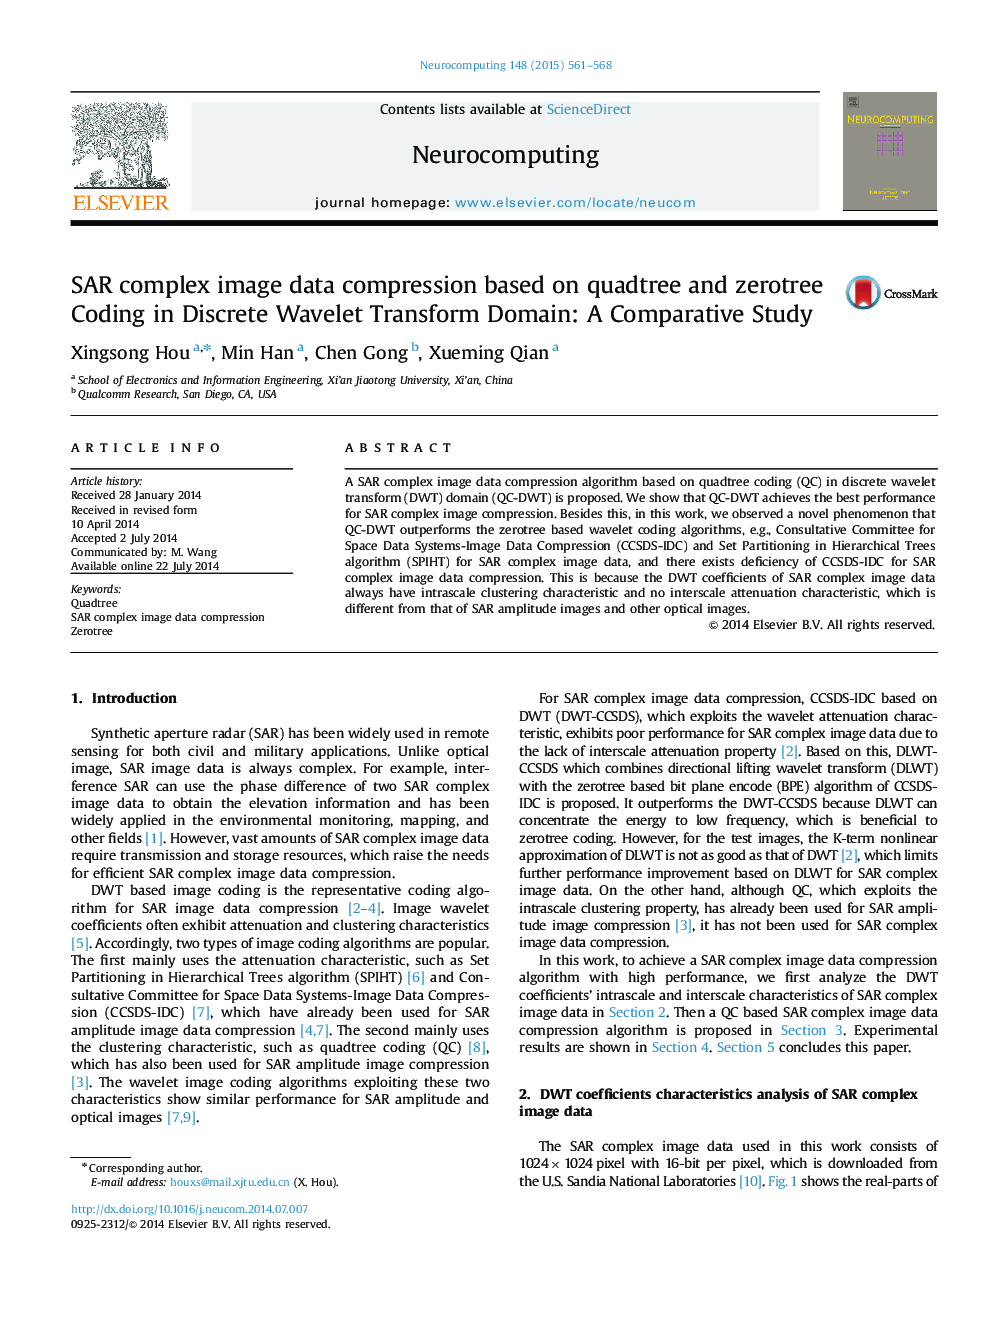 SAR complex image data compression based on quadtree and zerotree Coding in Discrete Wavelet Transform Domain: A Comparative Study